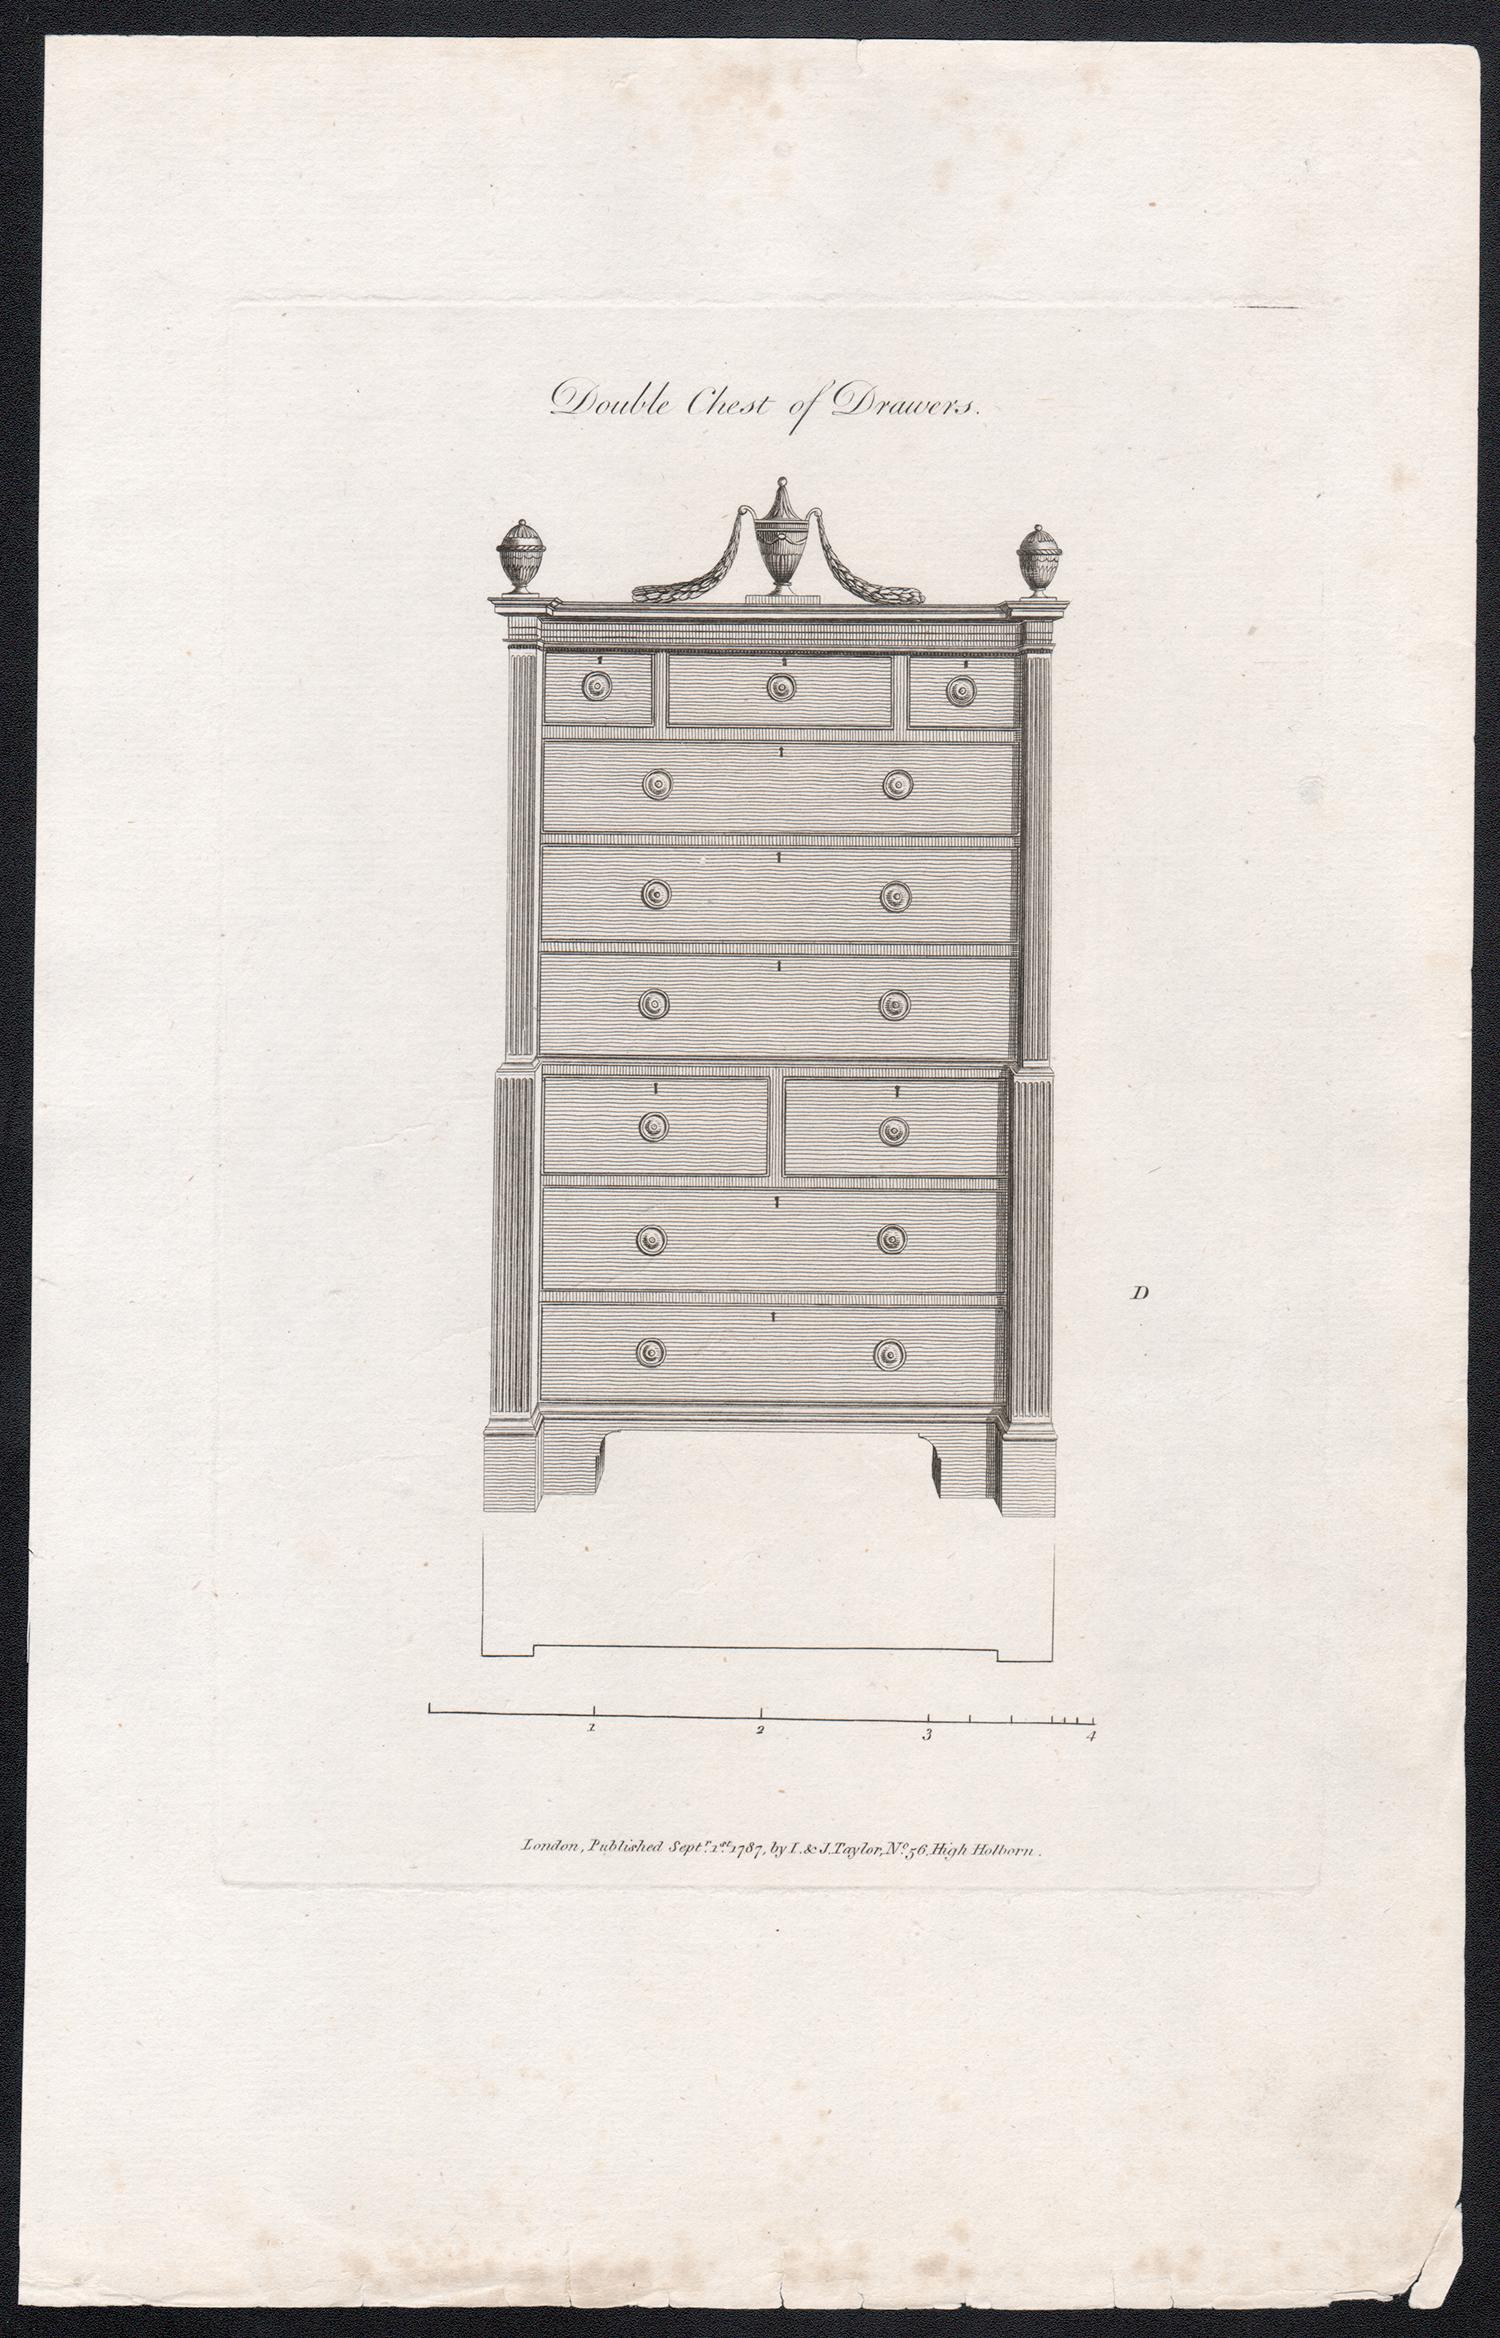 Double Chest of Drawers, Hepplewhite Georgian furniture design engraving - Print by George Hepplewhite